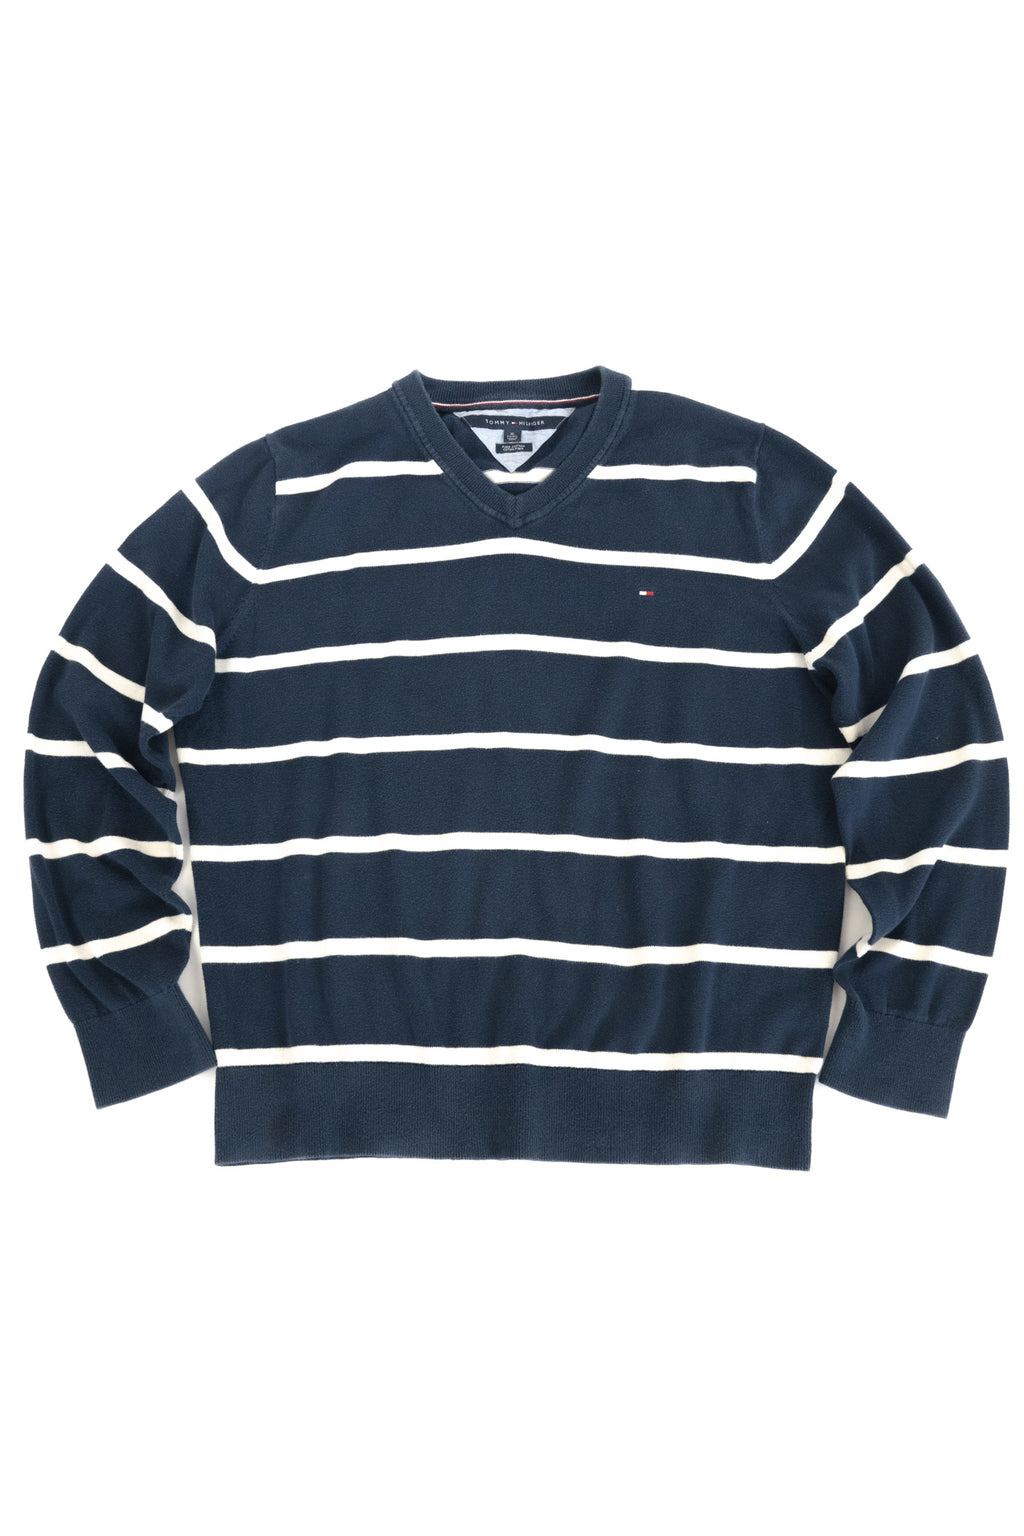 Vintage JBJ Sportswear City Skyline Blue Striped Cable-Knit